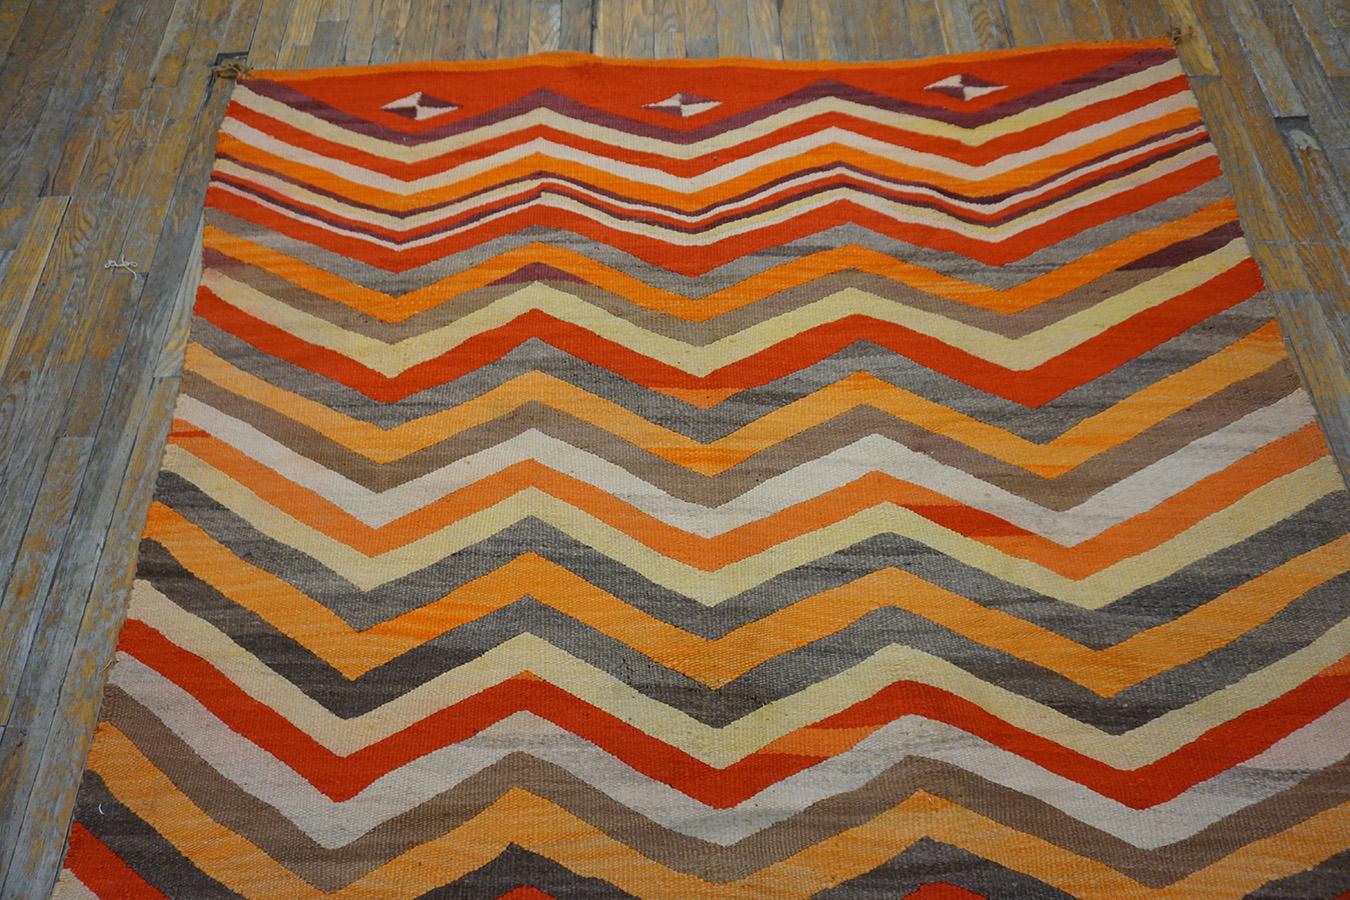 Late 19th Century 19th Century Transitional Period American Navajo Carpet (5'5